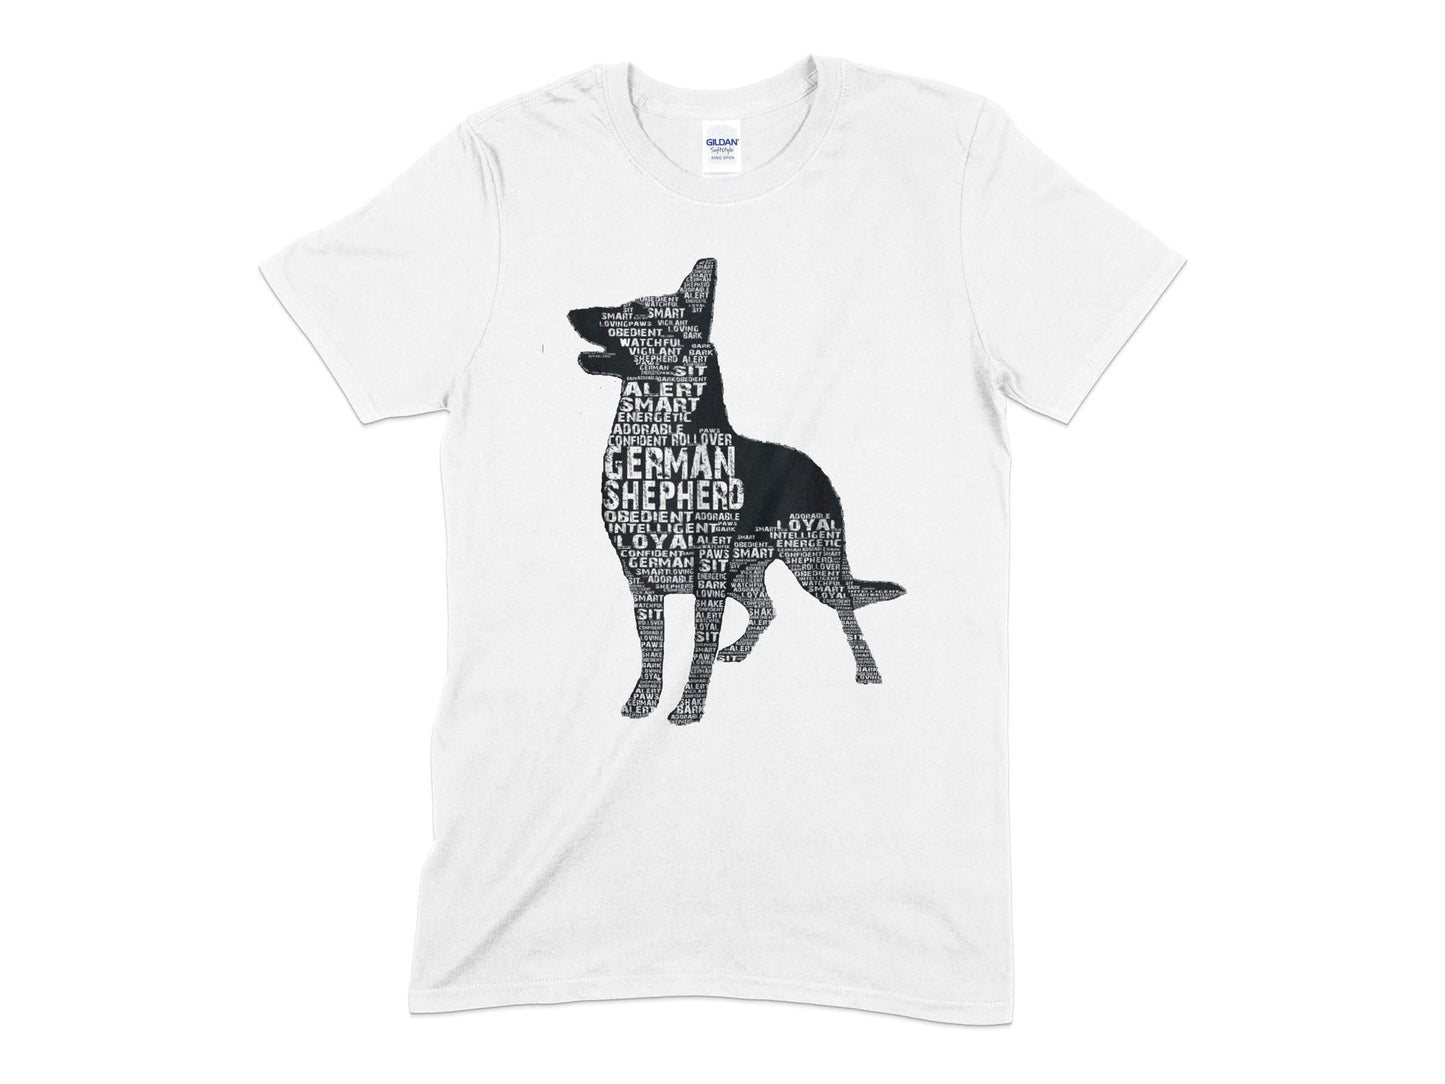 German Shephard dog animal t-shirt - Premium t-shirt from MyDesigns - Just $19.95! Shop now at Lees Krazy Teez